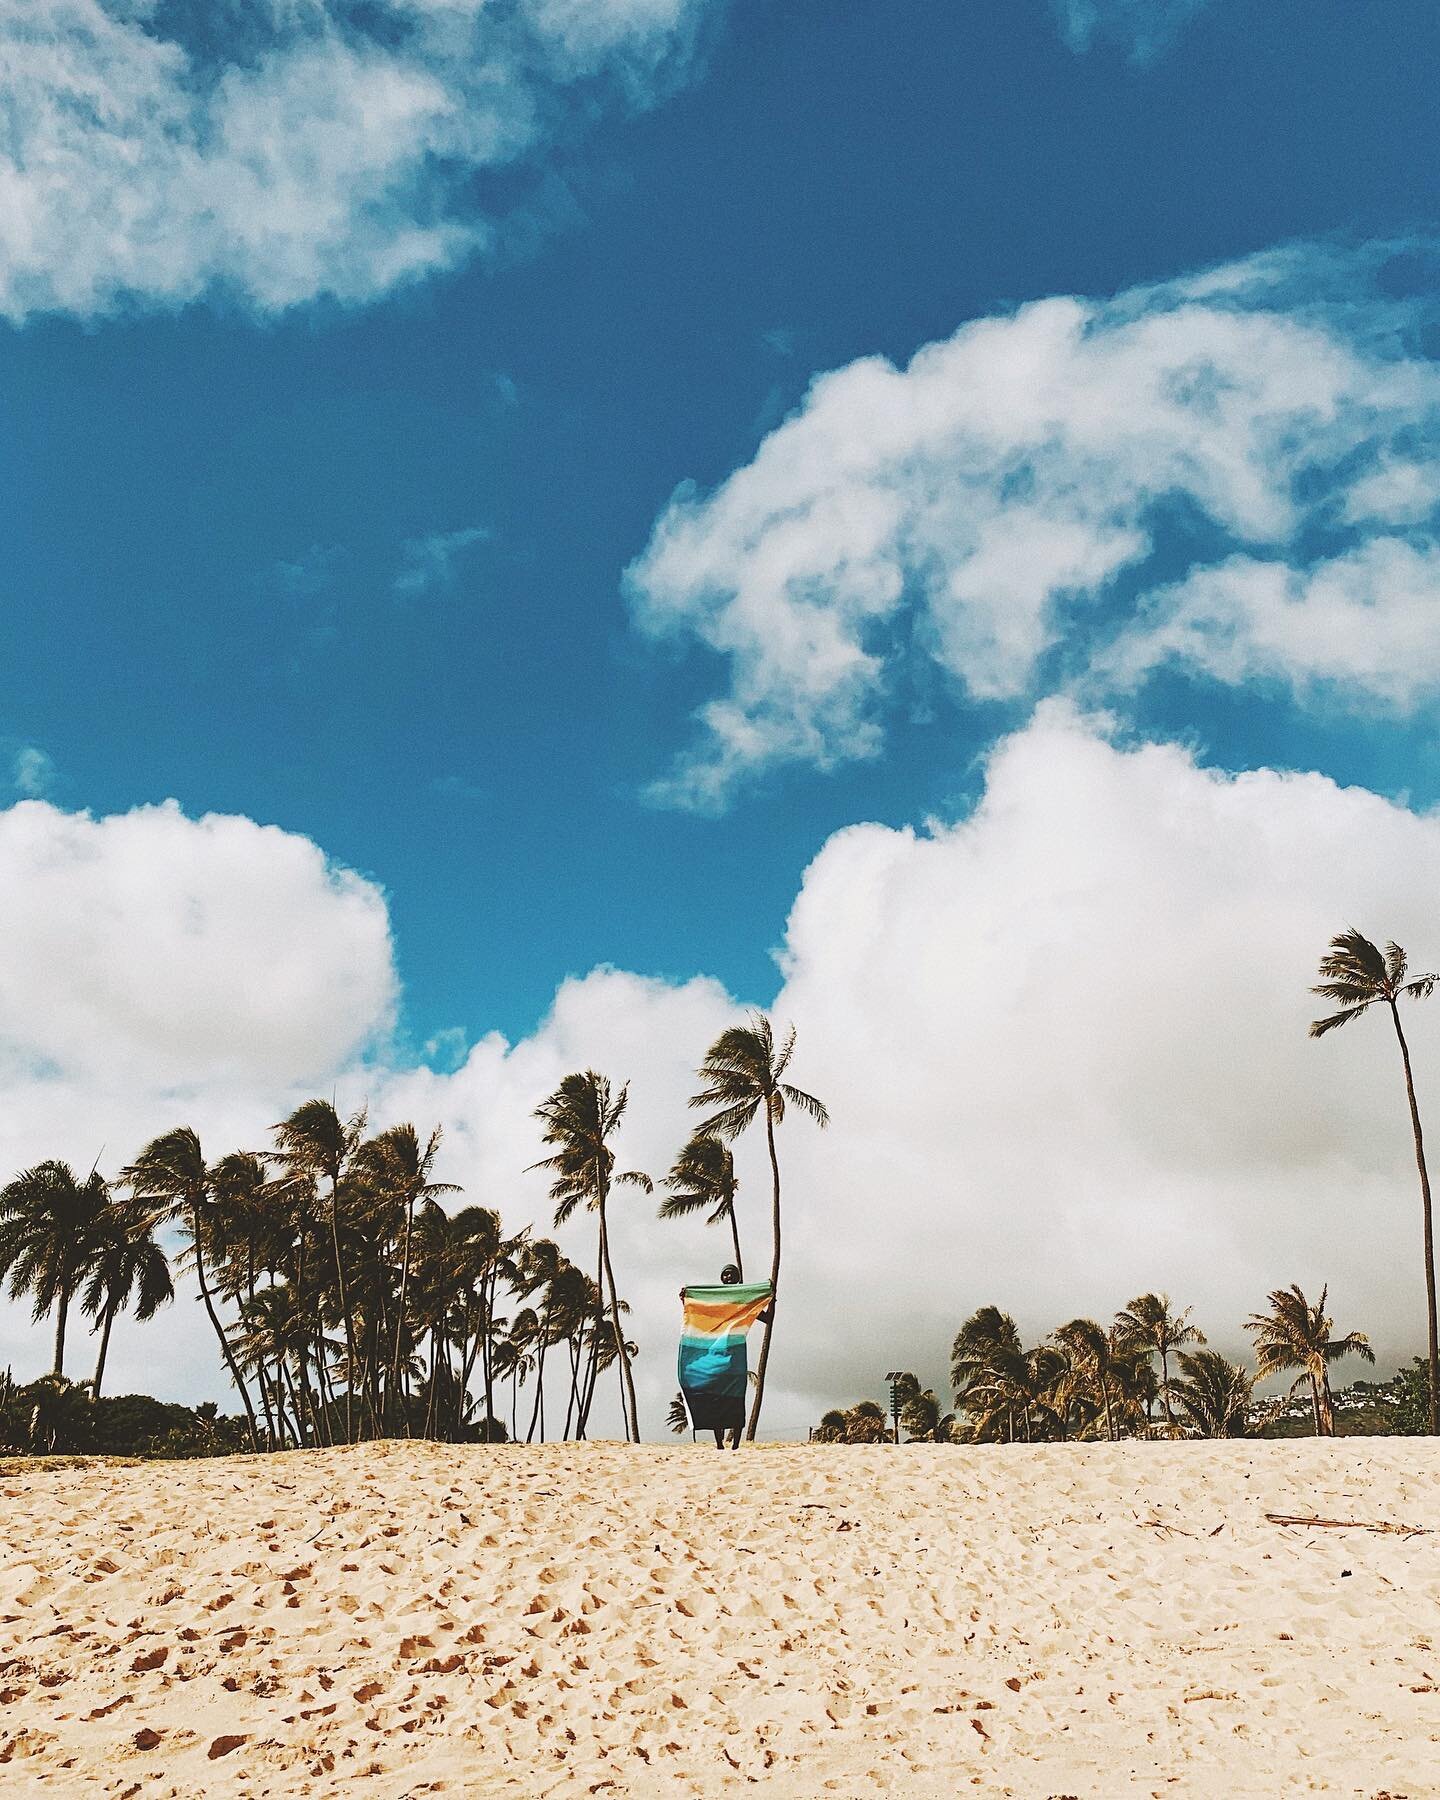 on a beach far, far away...
.
.
only a few more of our FO collab beach towels left 💥
.
.
📷: @noahofthesea 
.
.
#getoutside #letsgobeach #beachpeople #beach #beachtowel #sand #hawaiilife #oahu #hawaii #happyplace #fieldnotes #enjoy #livesimply #slow